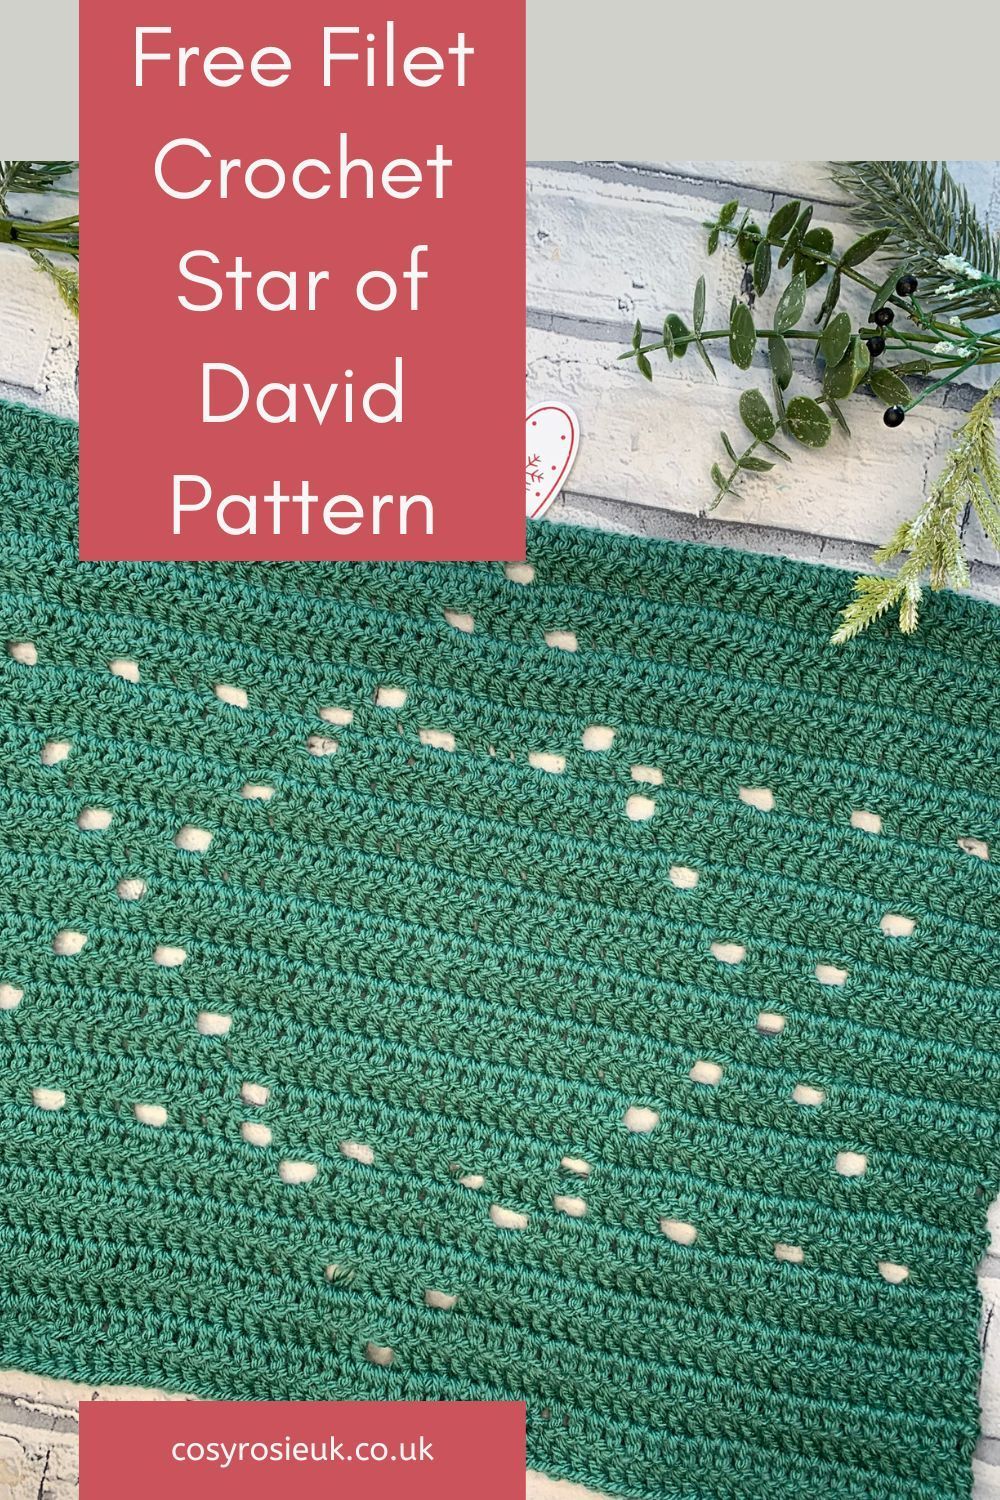 Free Filet Crochet Star of David Pattern 